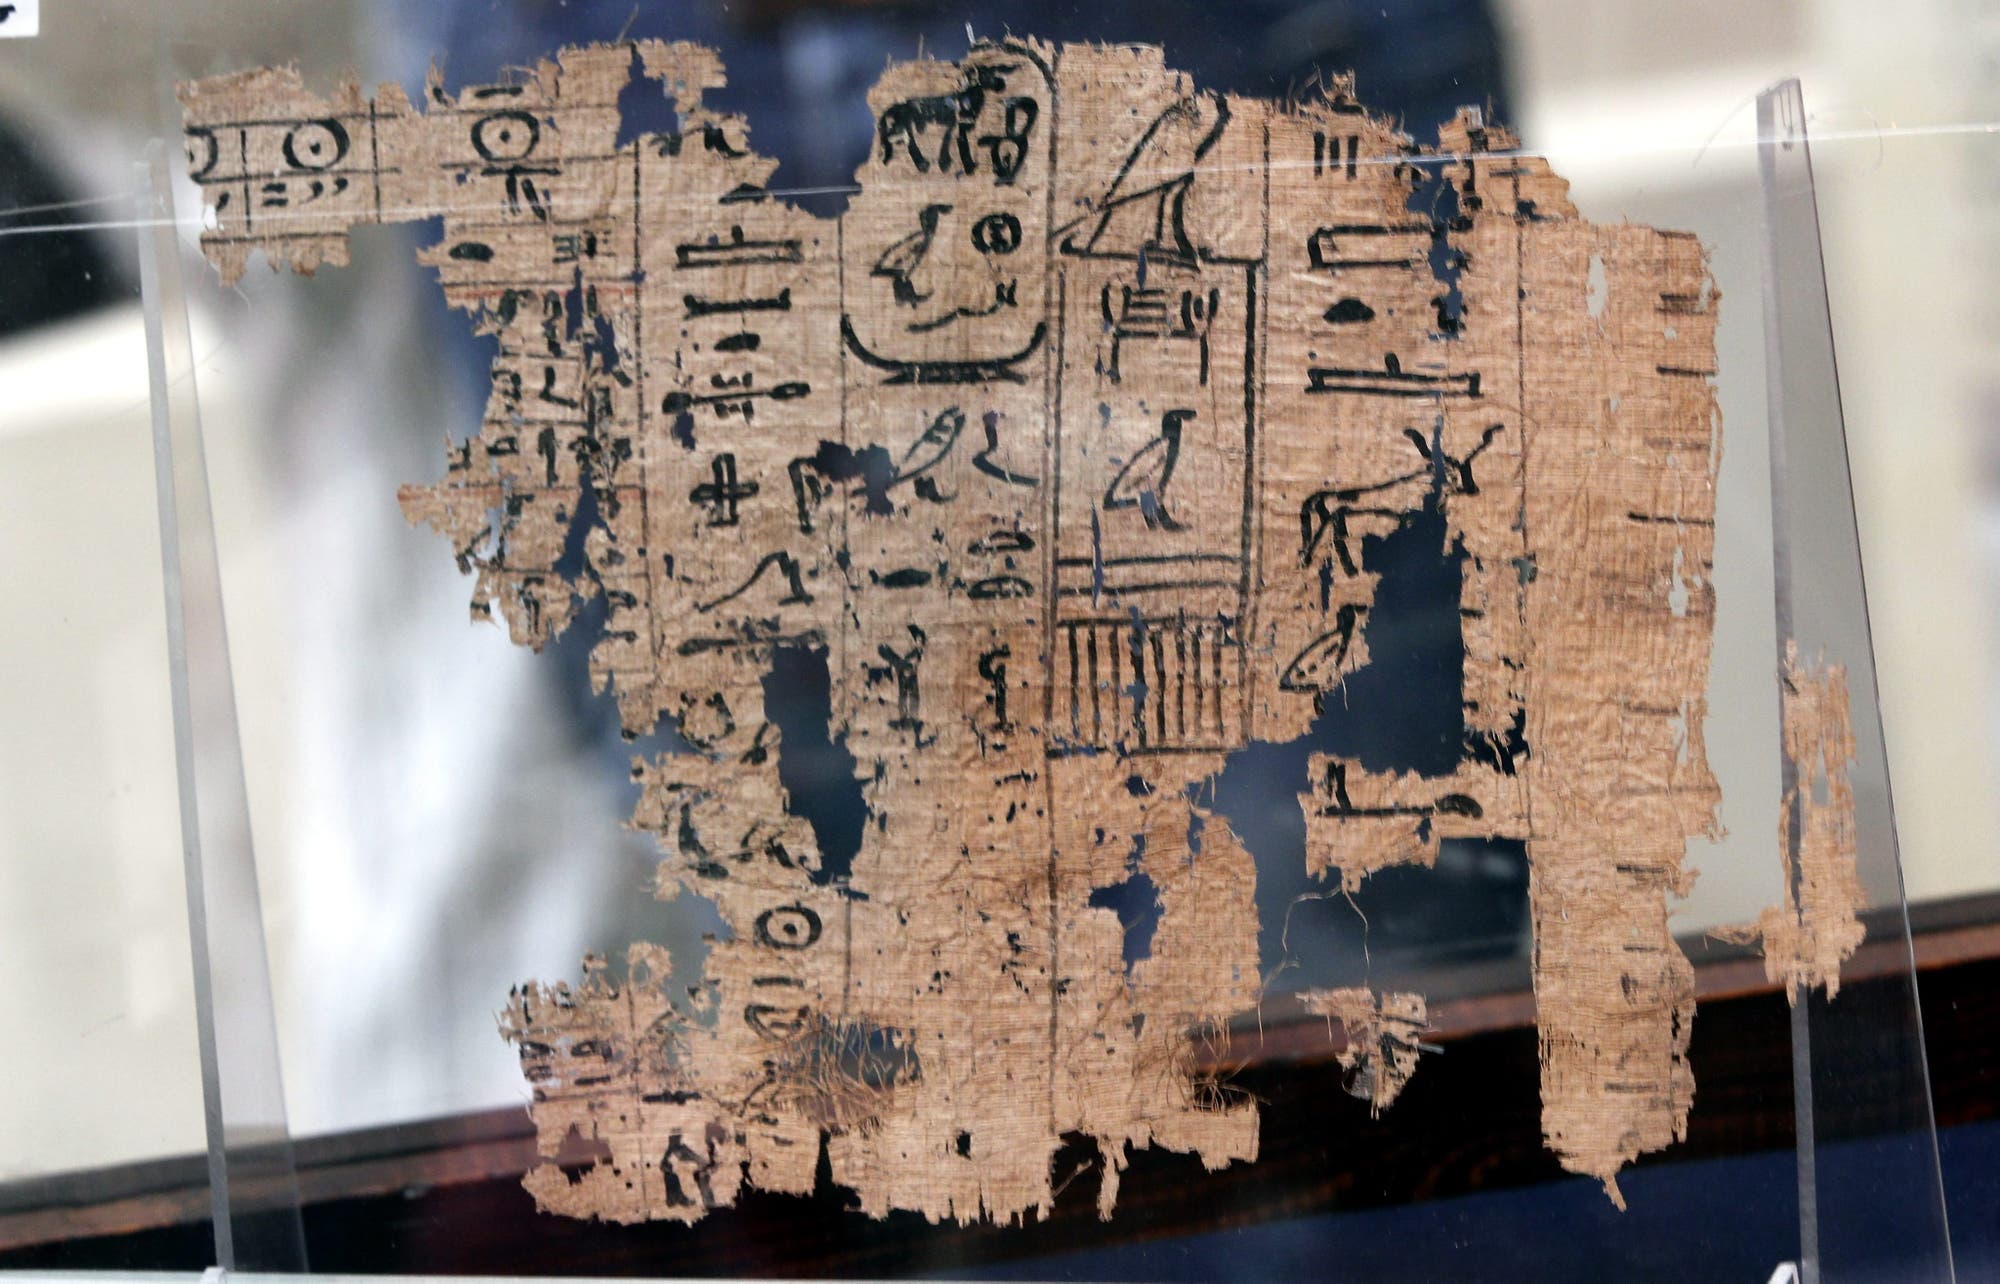 Papyrus 